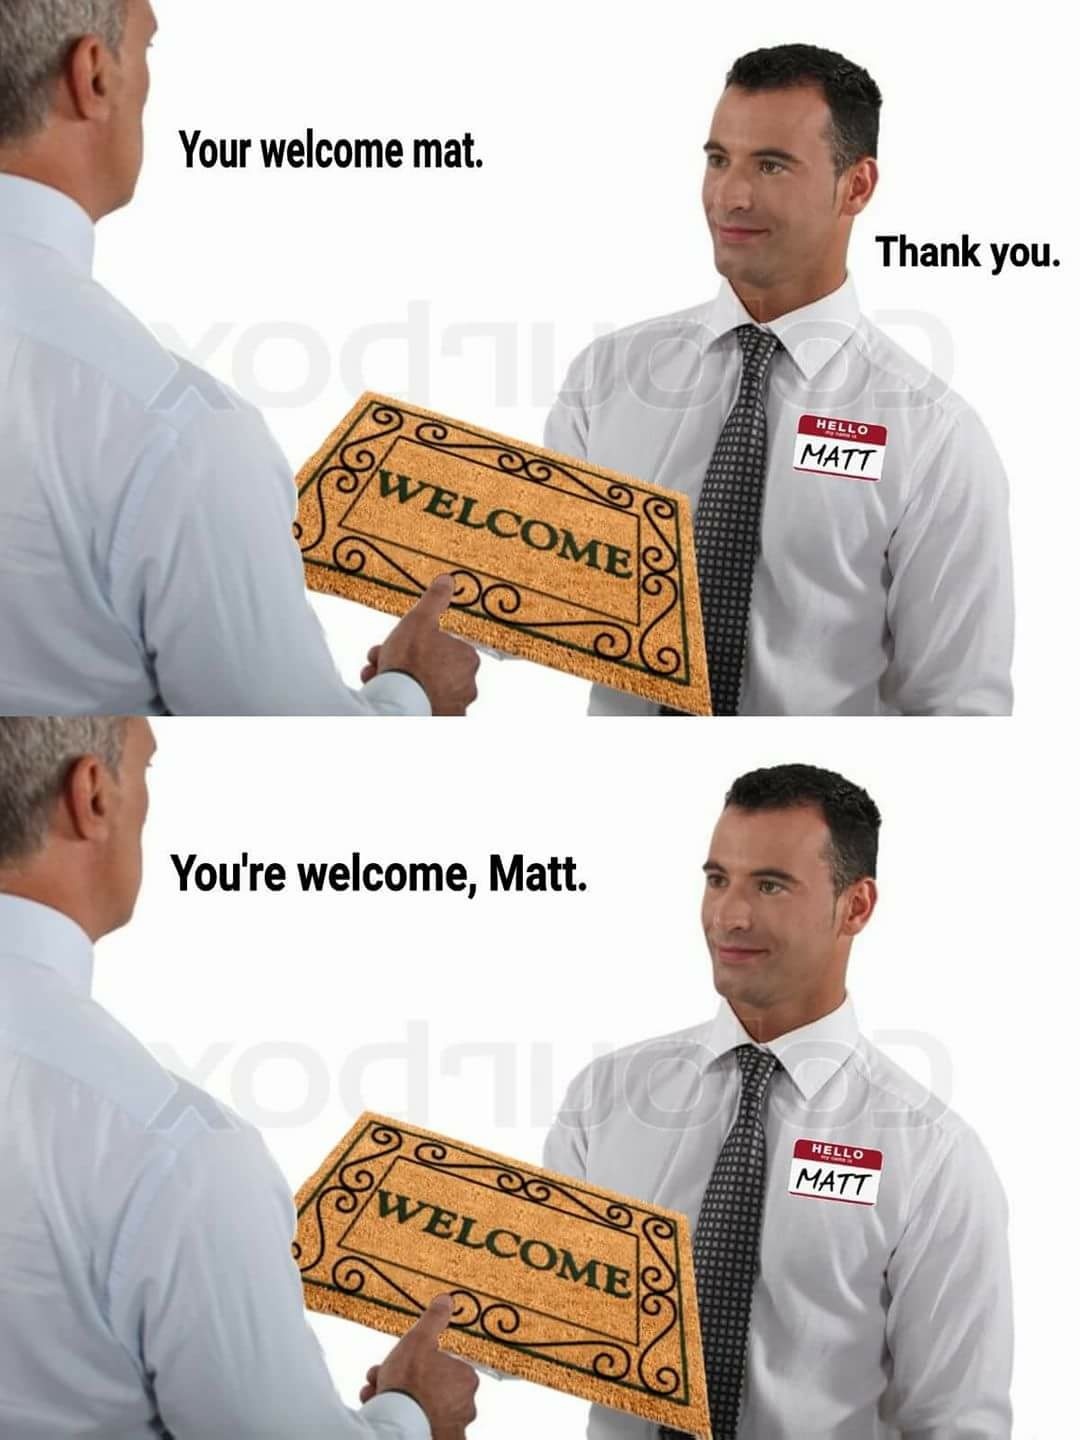 Matt is welcome - meme